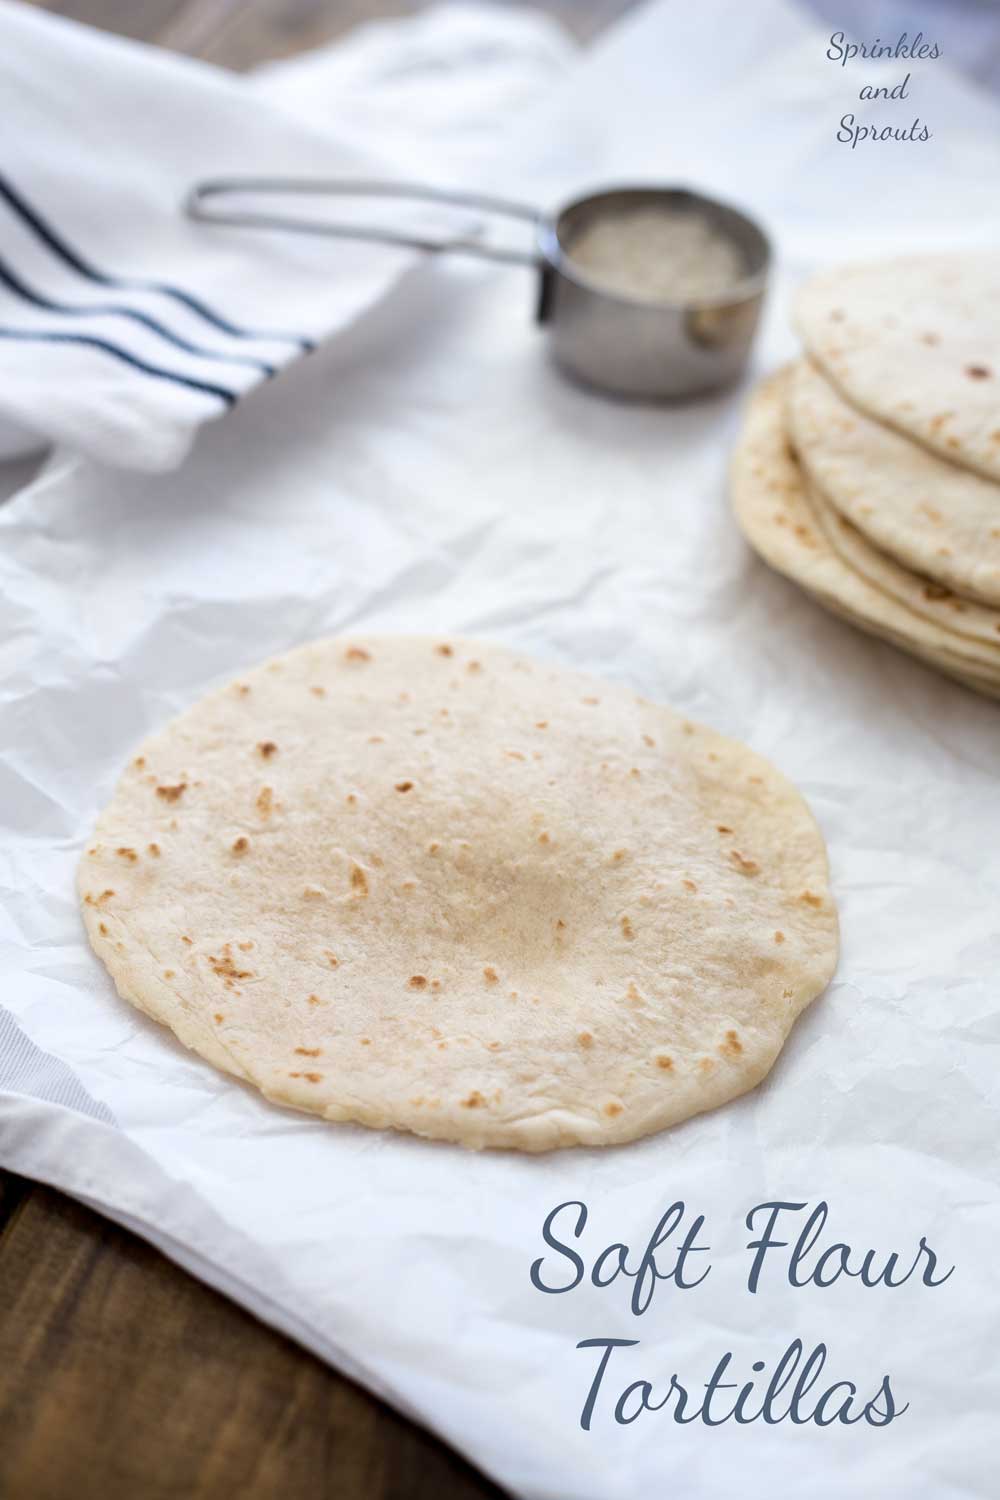 Soft flour tortillas, essential for tacos, quesadillas, burritos and fajitas. This recipe produces soft flexible tortillas with just 5 ingredients.